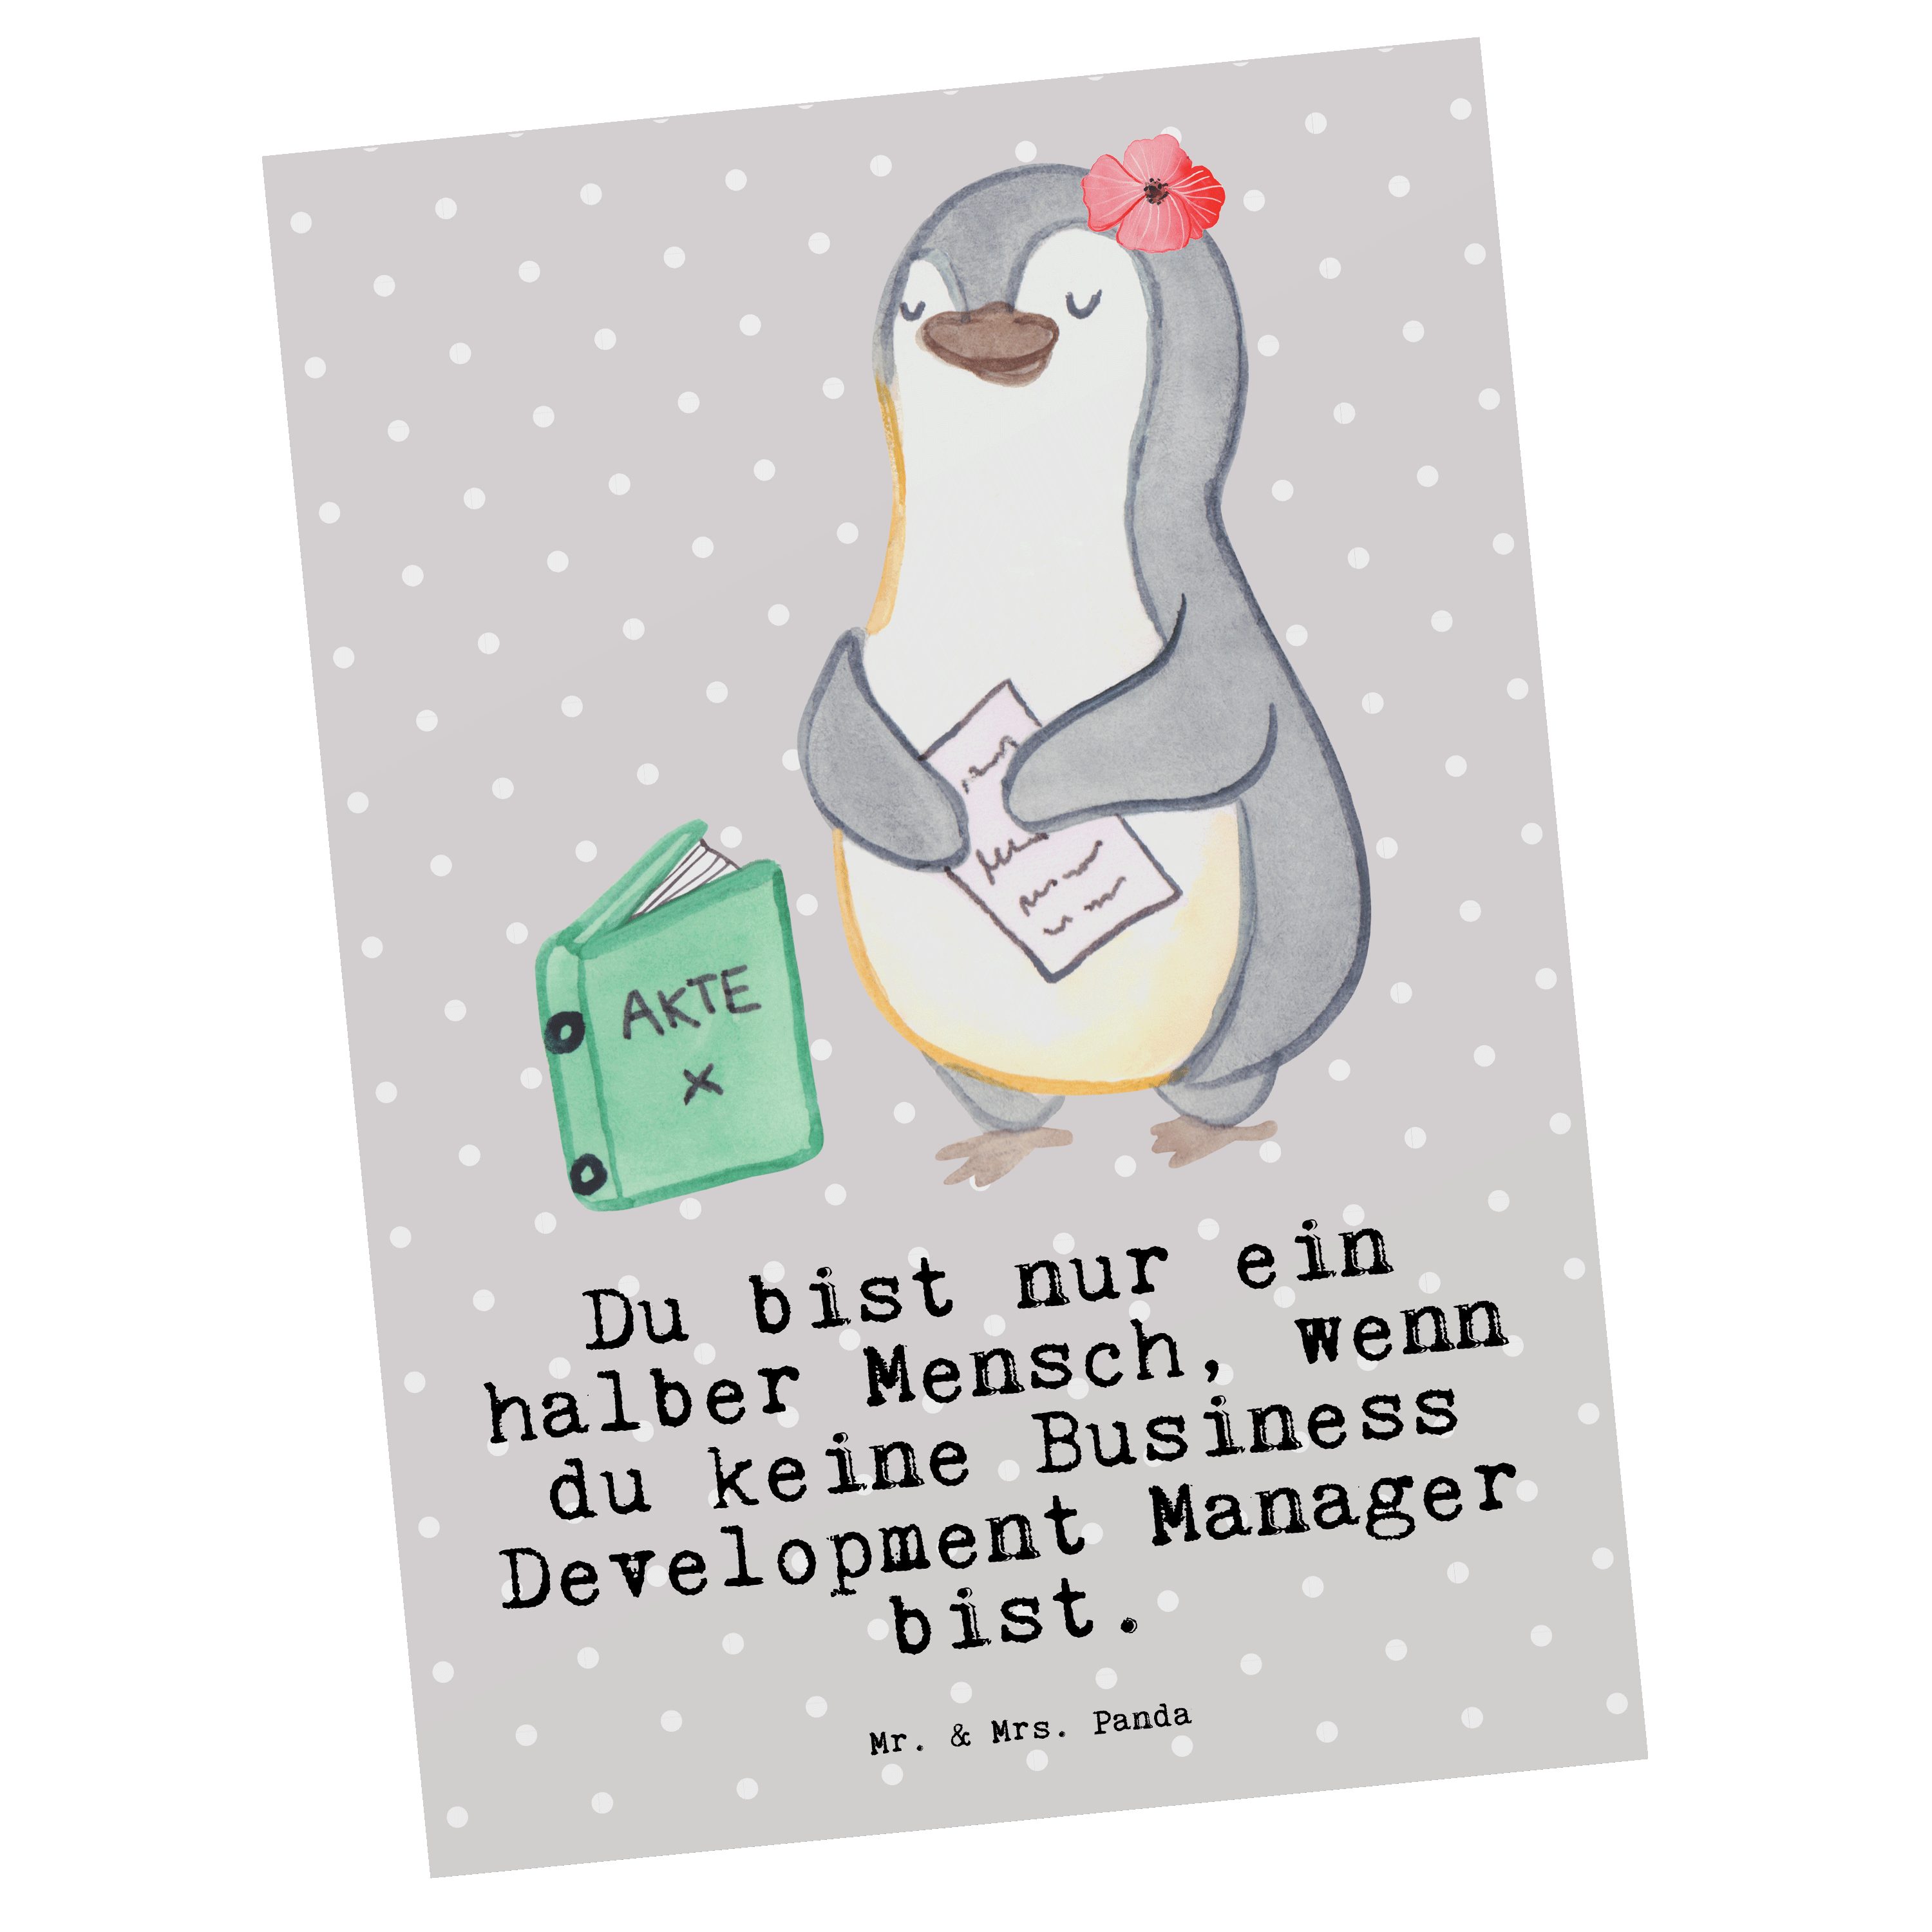 Mr. & Mrs. Panda Postkarte Business Development Manager mit Herz - Grau Pastell - Geschenk, Kart